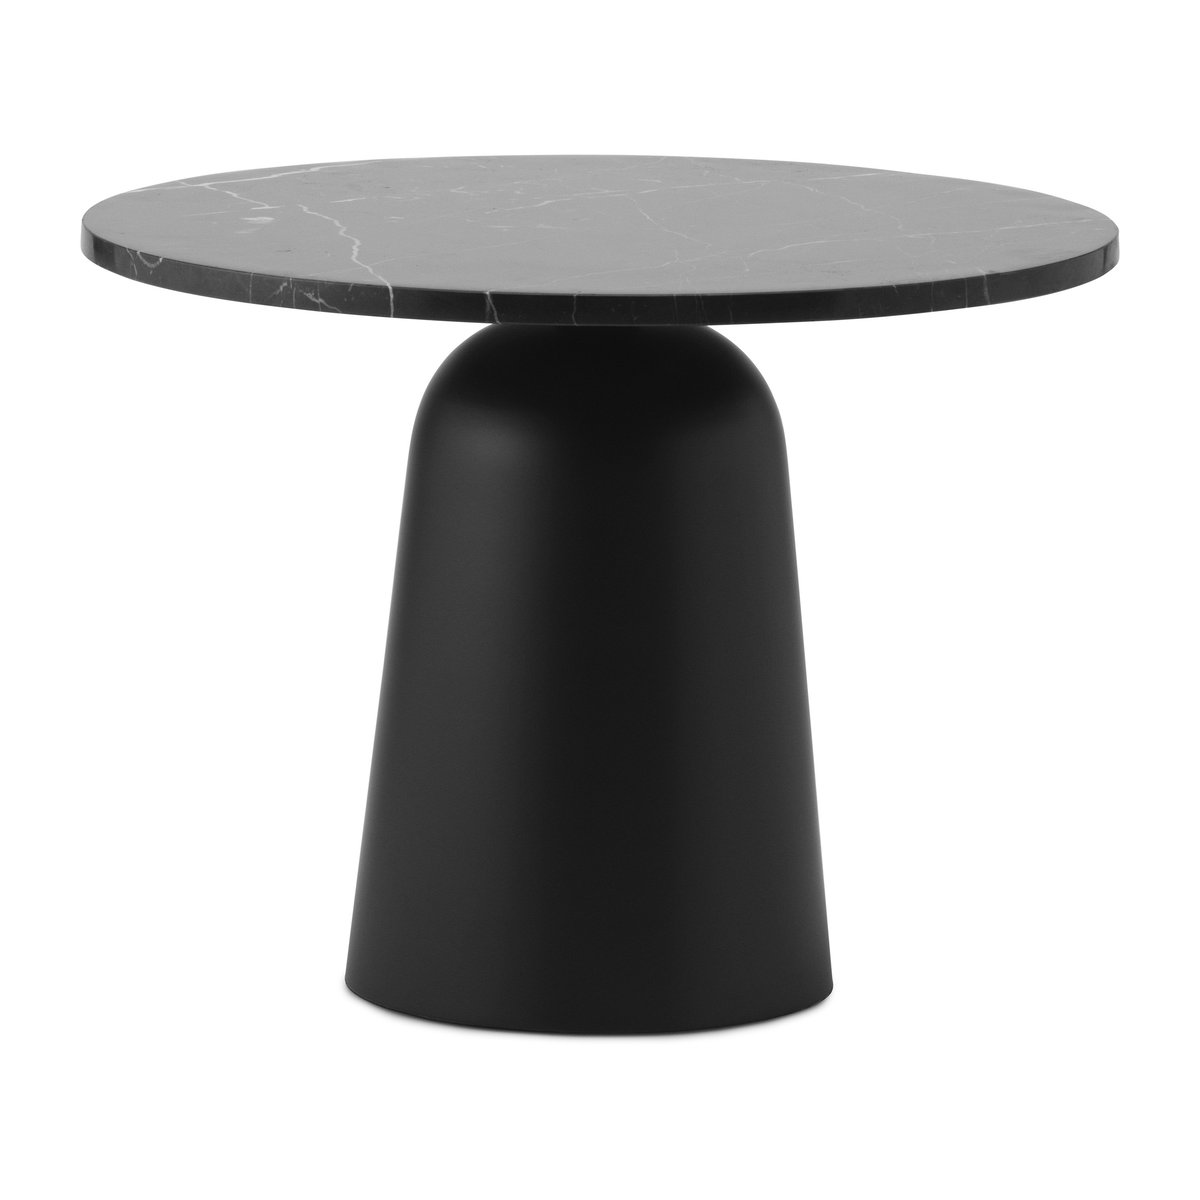 Normann Copenhagen Turn verstelbare tafel Ø55 cm Zwart marmer